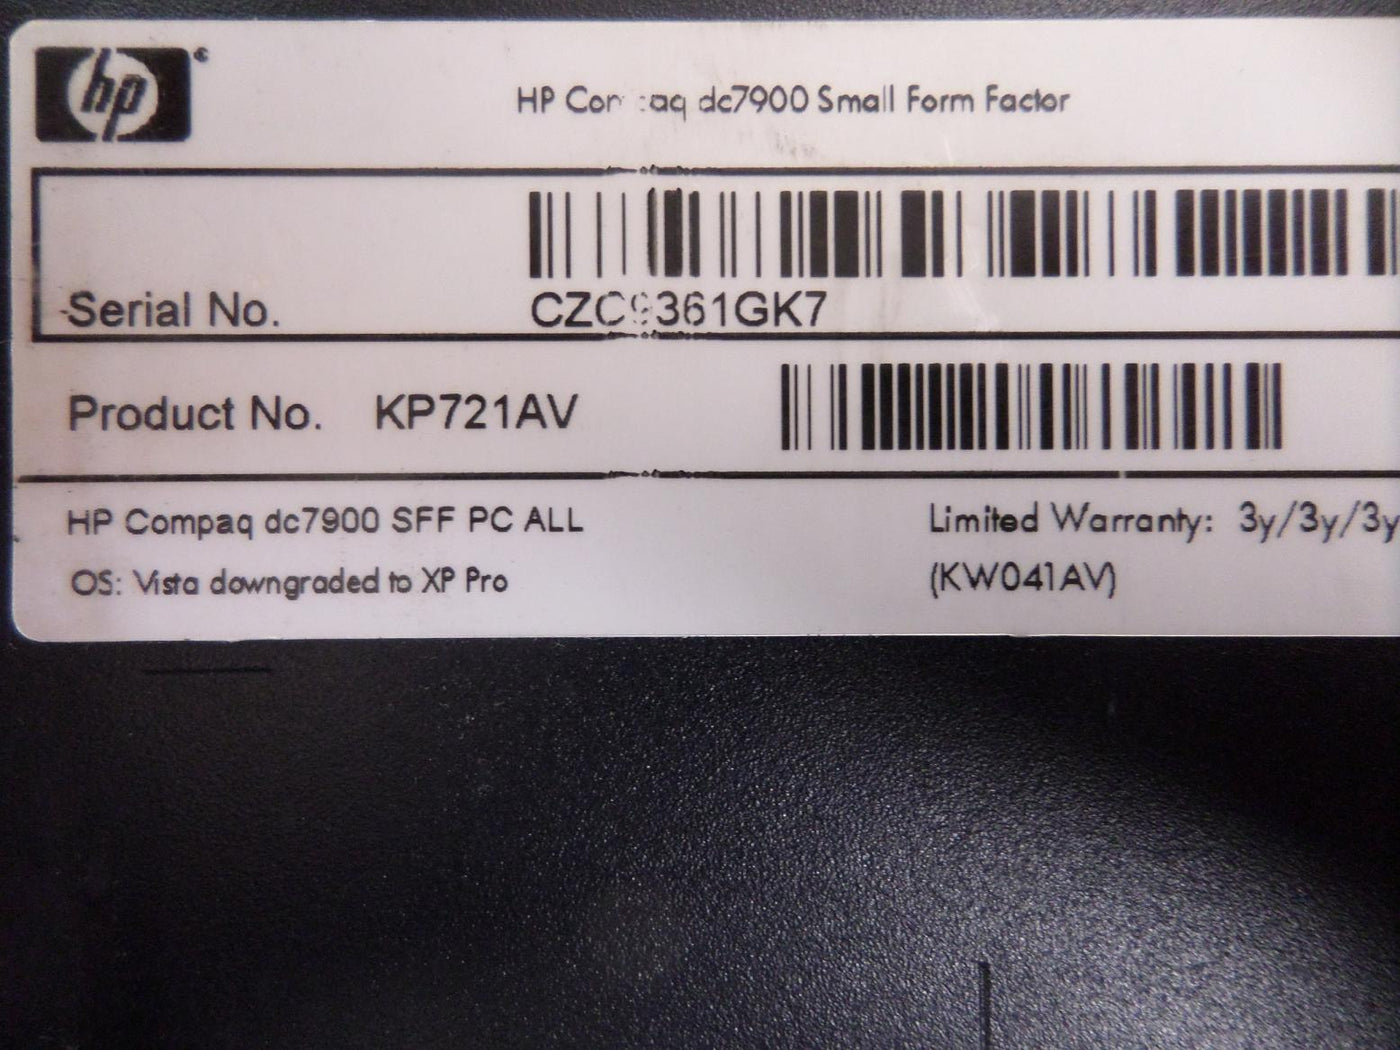 PR24928_KP721AV_HP Compaq DC7900 2.8GHz 160Gb HDD SFF PC - Image5